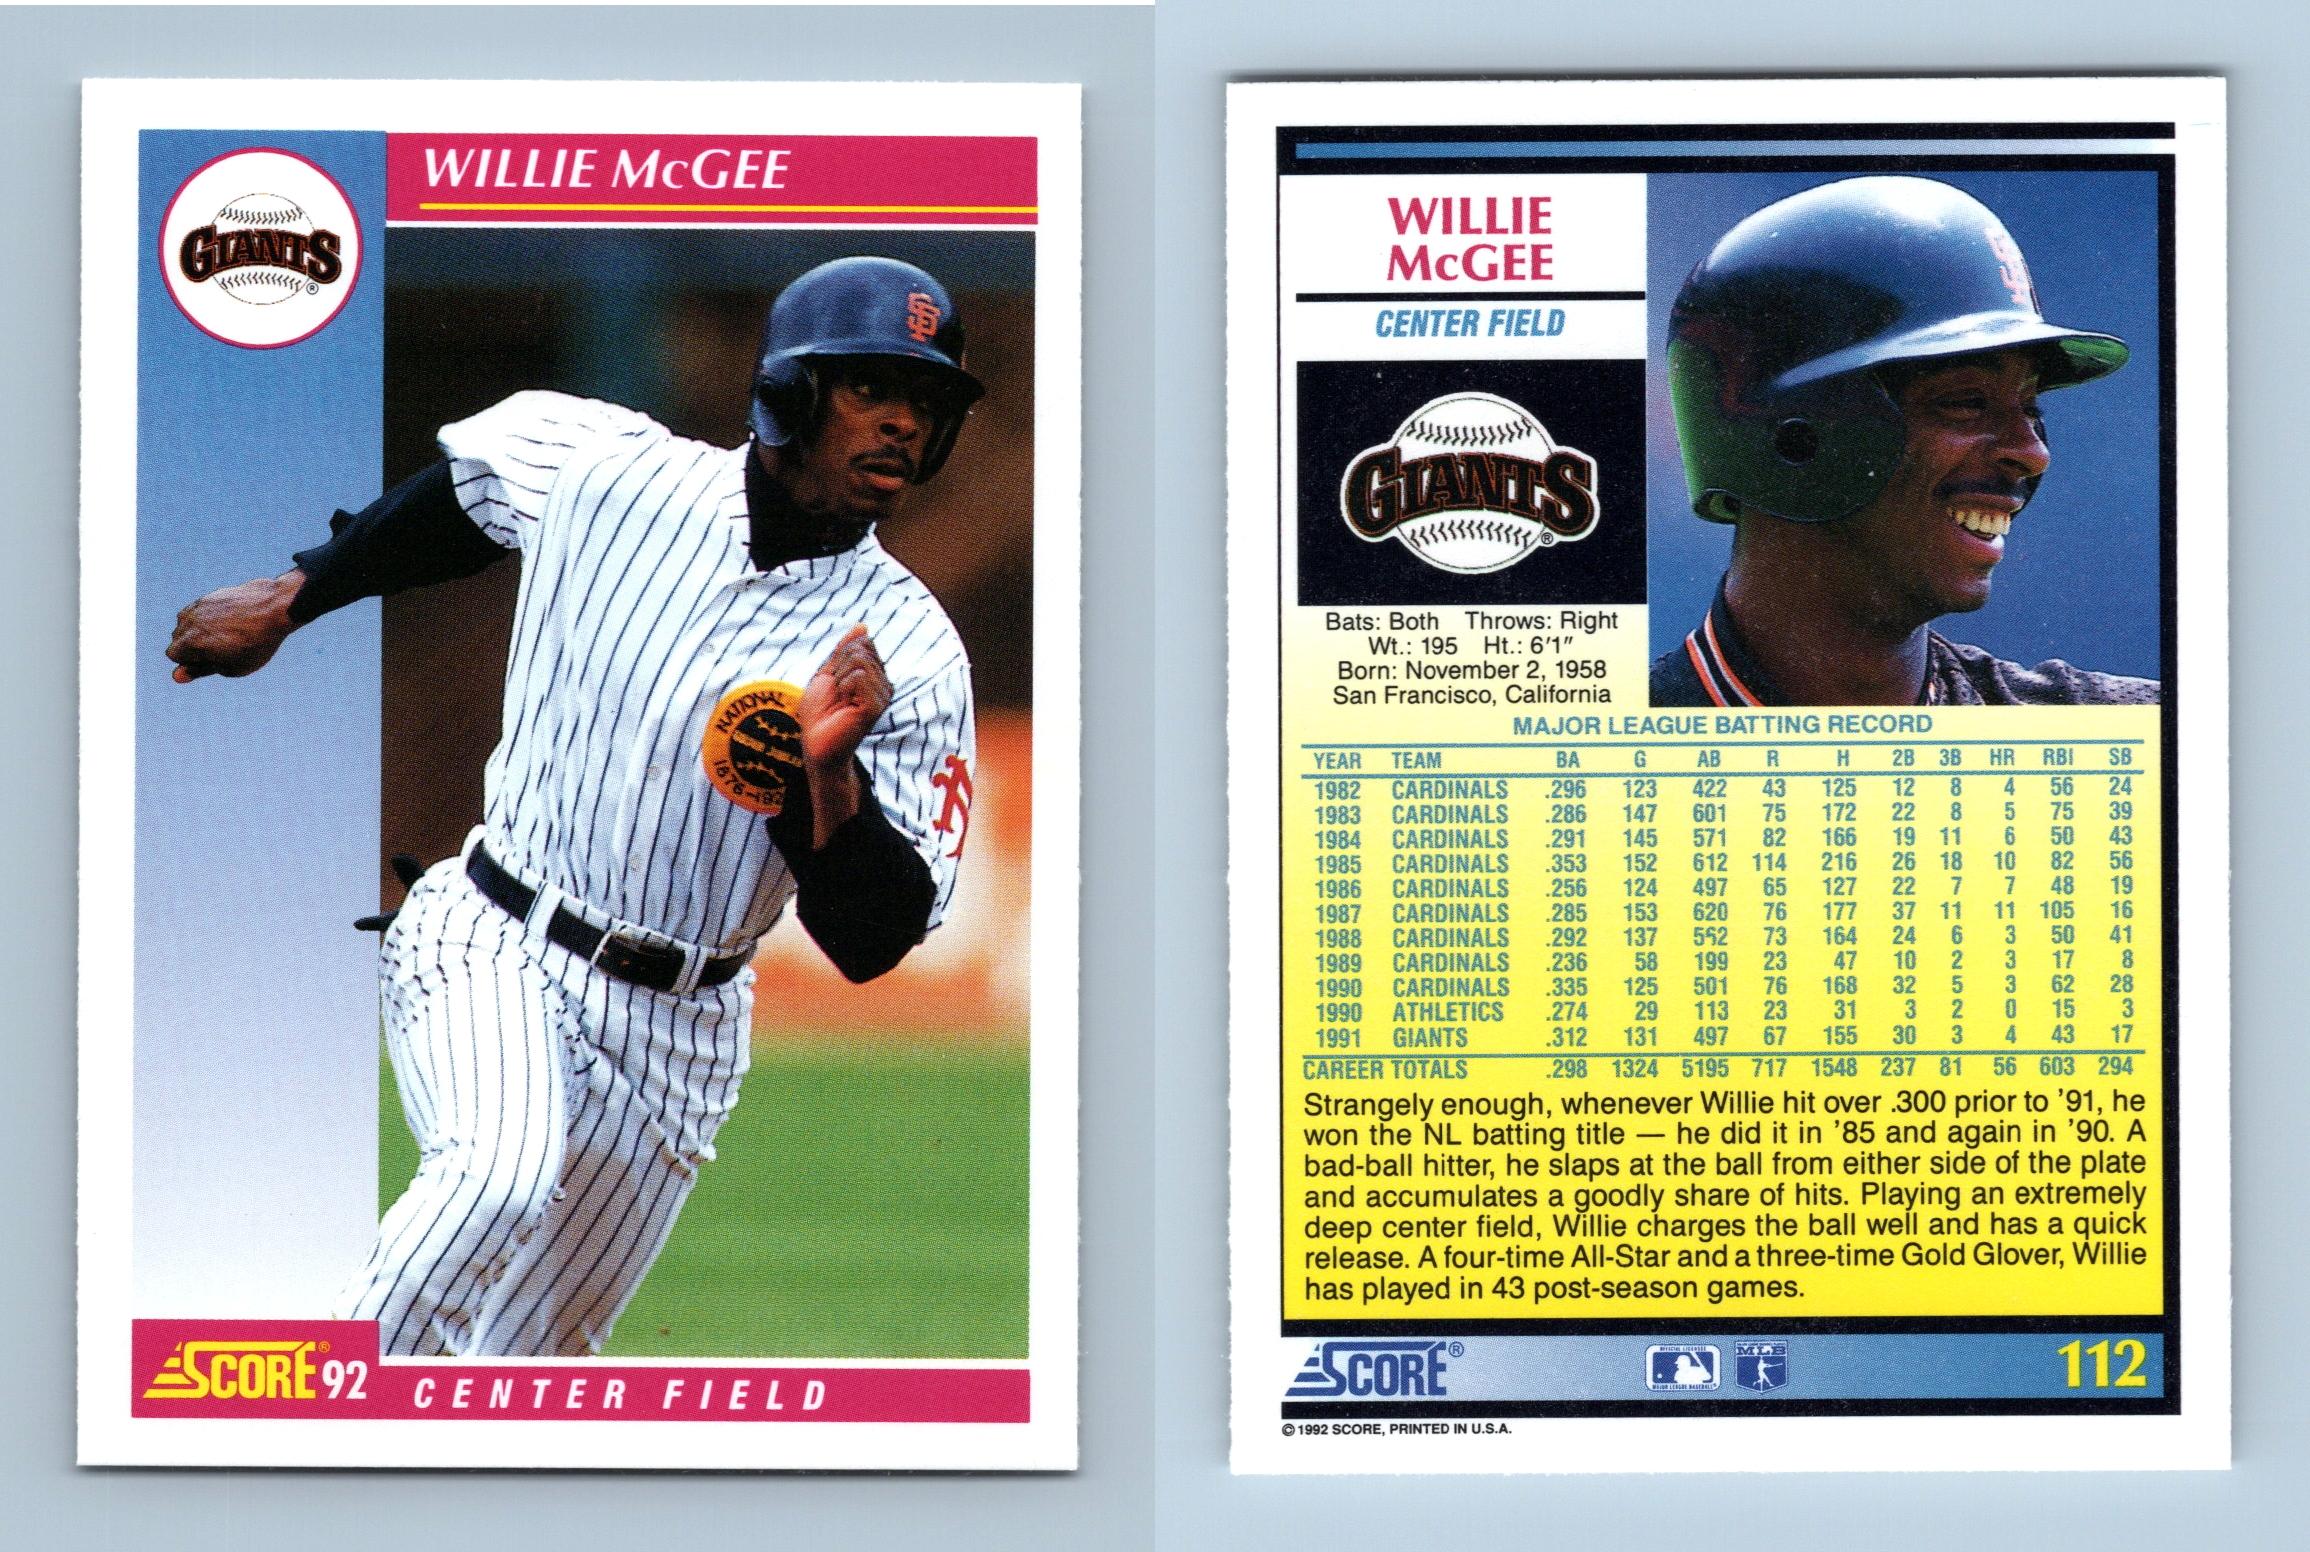 Kenny Lofton - Astros - #845 Score 1992 Baseball Trading Card